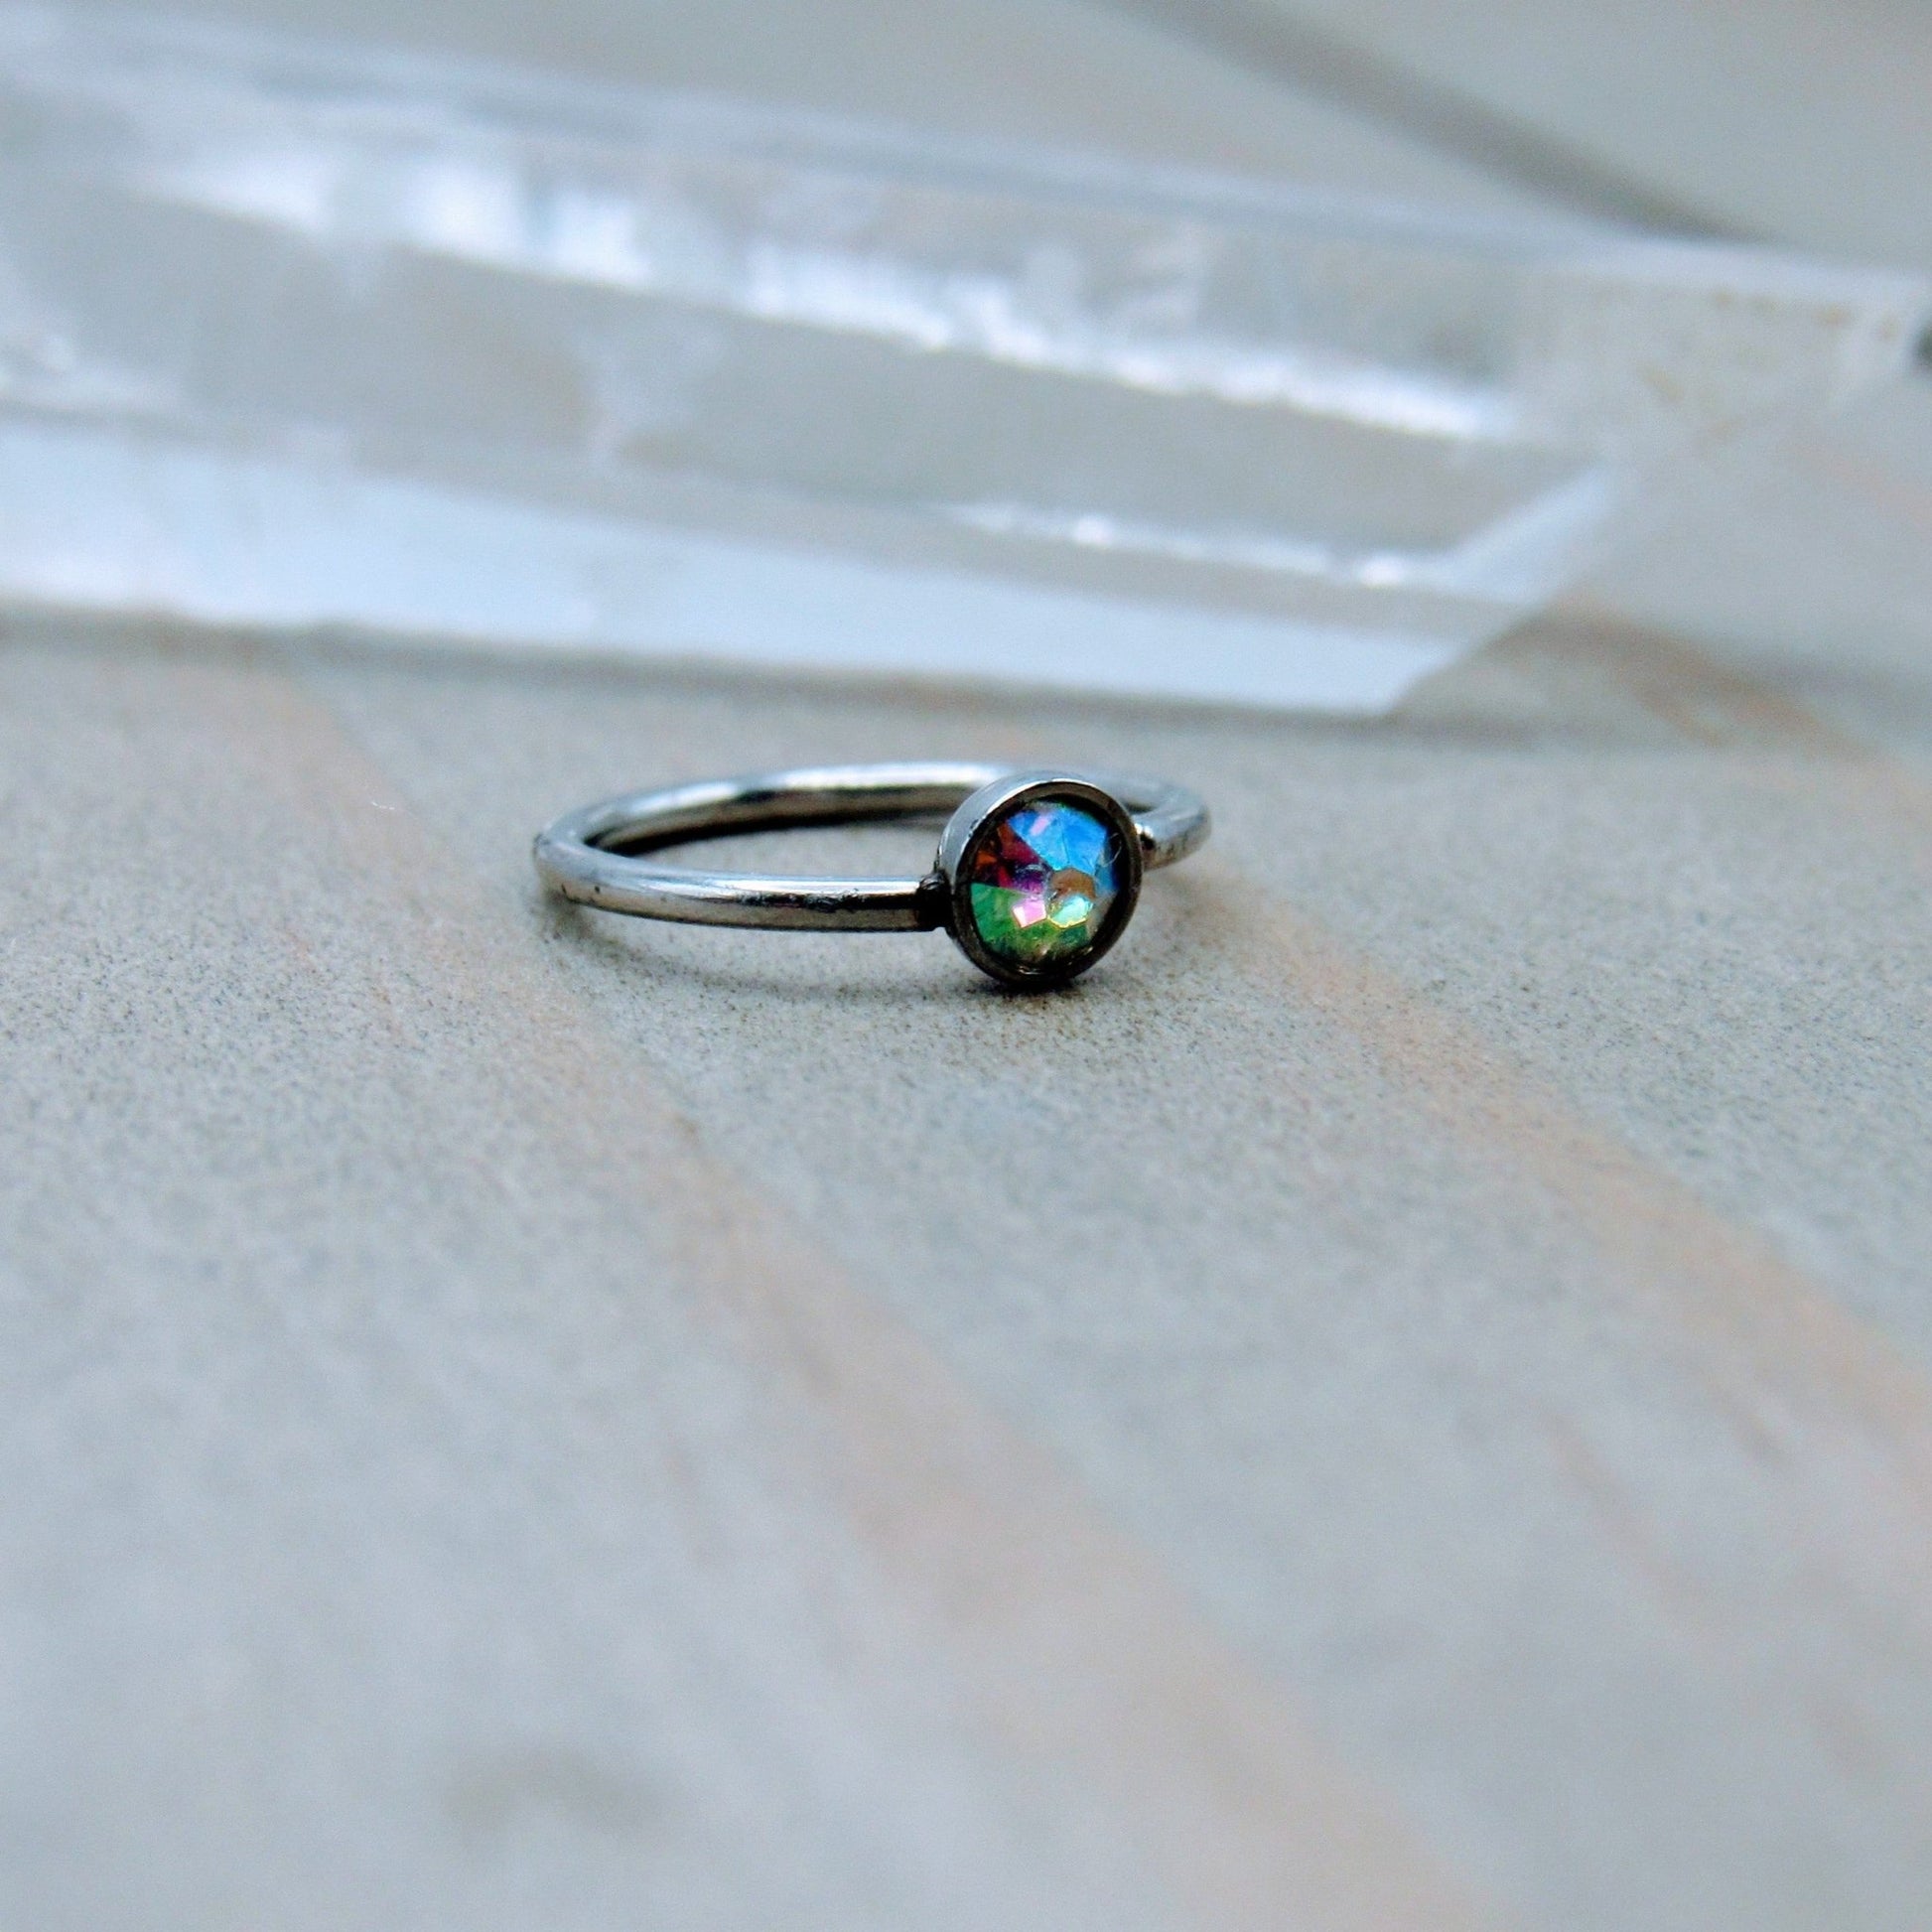 20g Nostril piercing hoop 5/16" silver stainless steel helix seam ring 3mm aurora borealis gemstone - Siren Body Jewelry